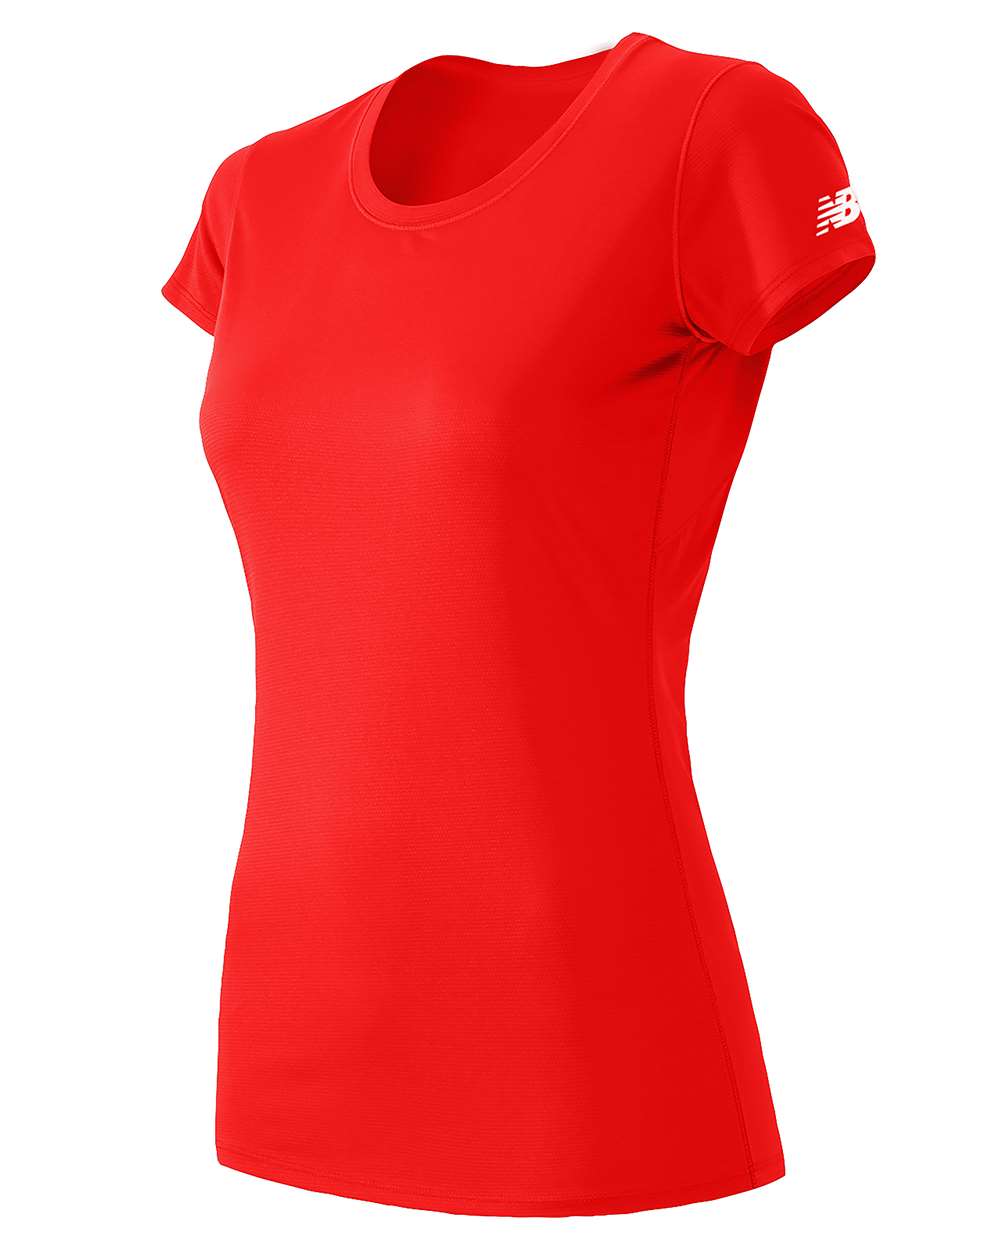 New Balance Women's Performance T-Shirt #WT81036P Red